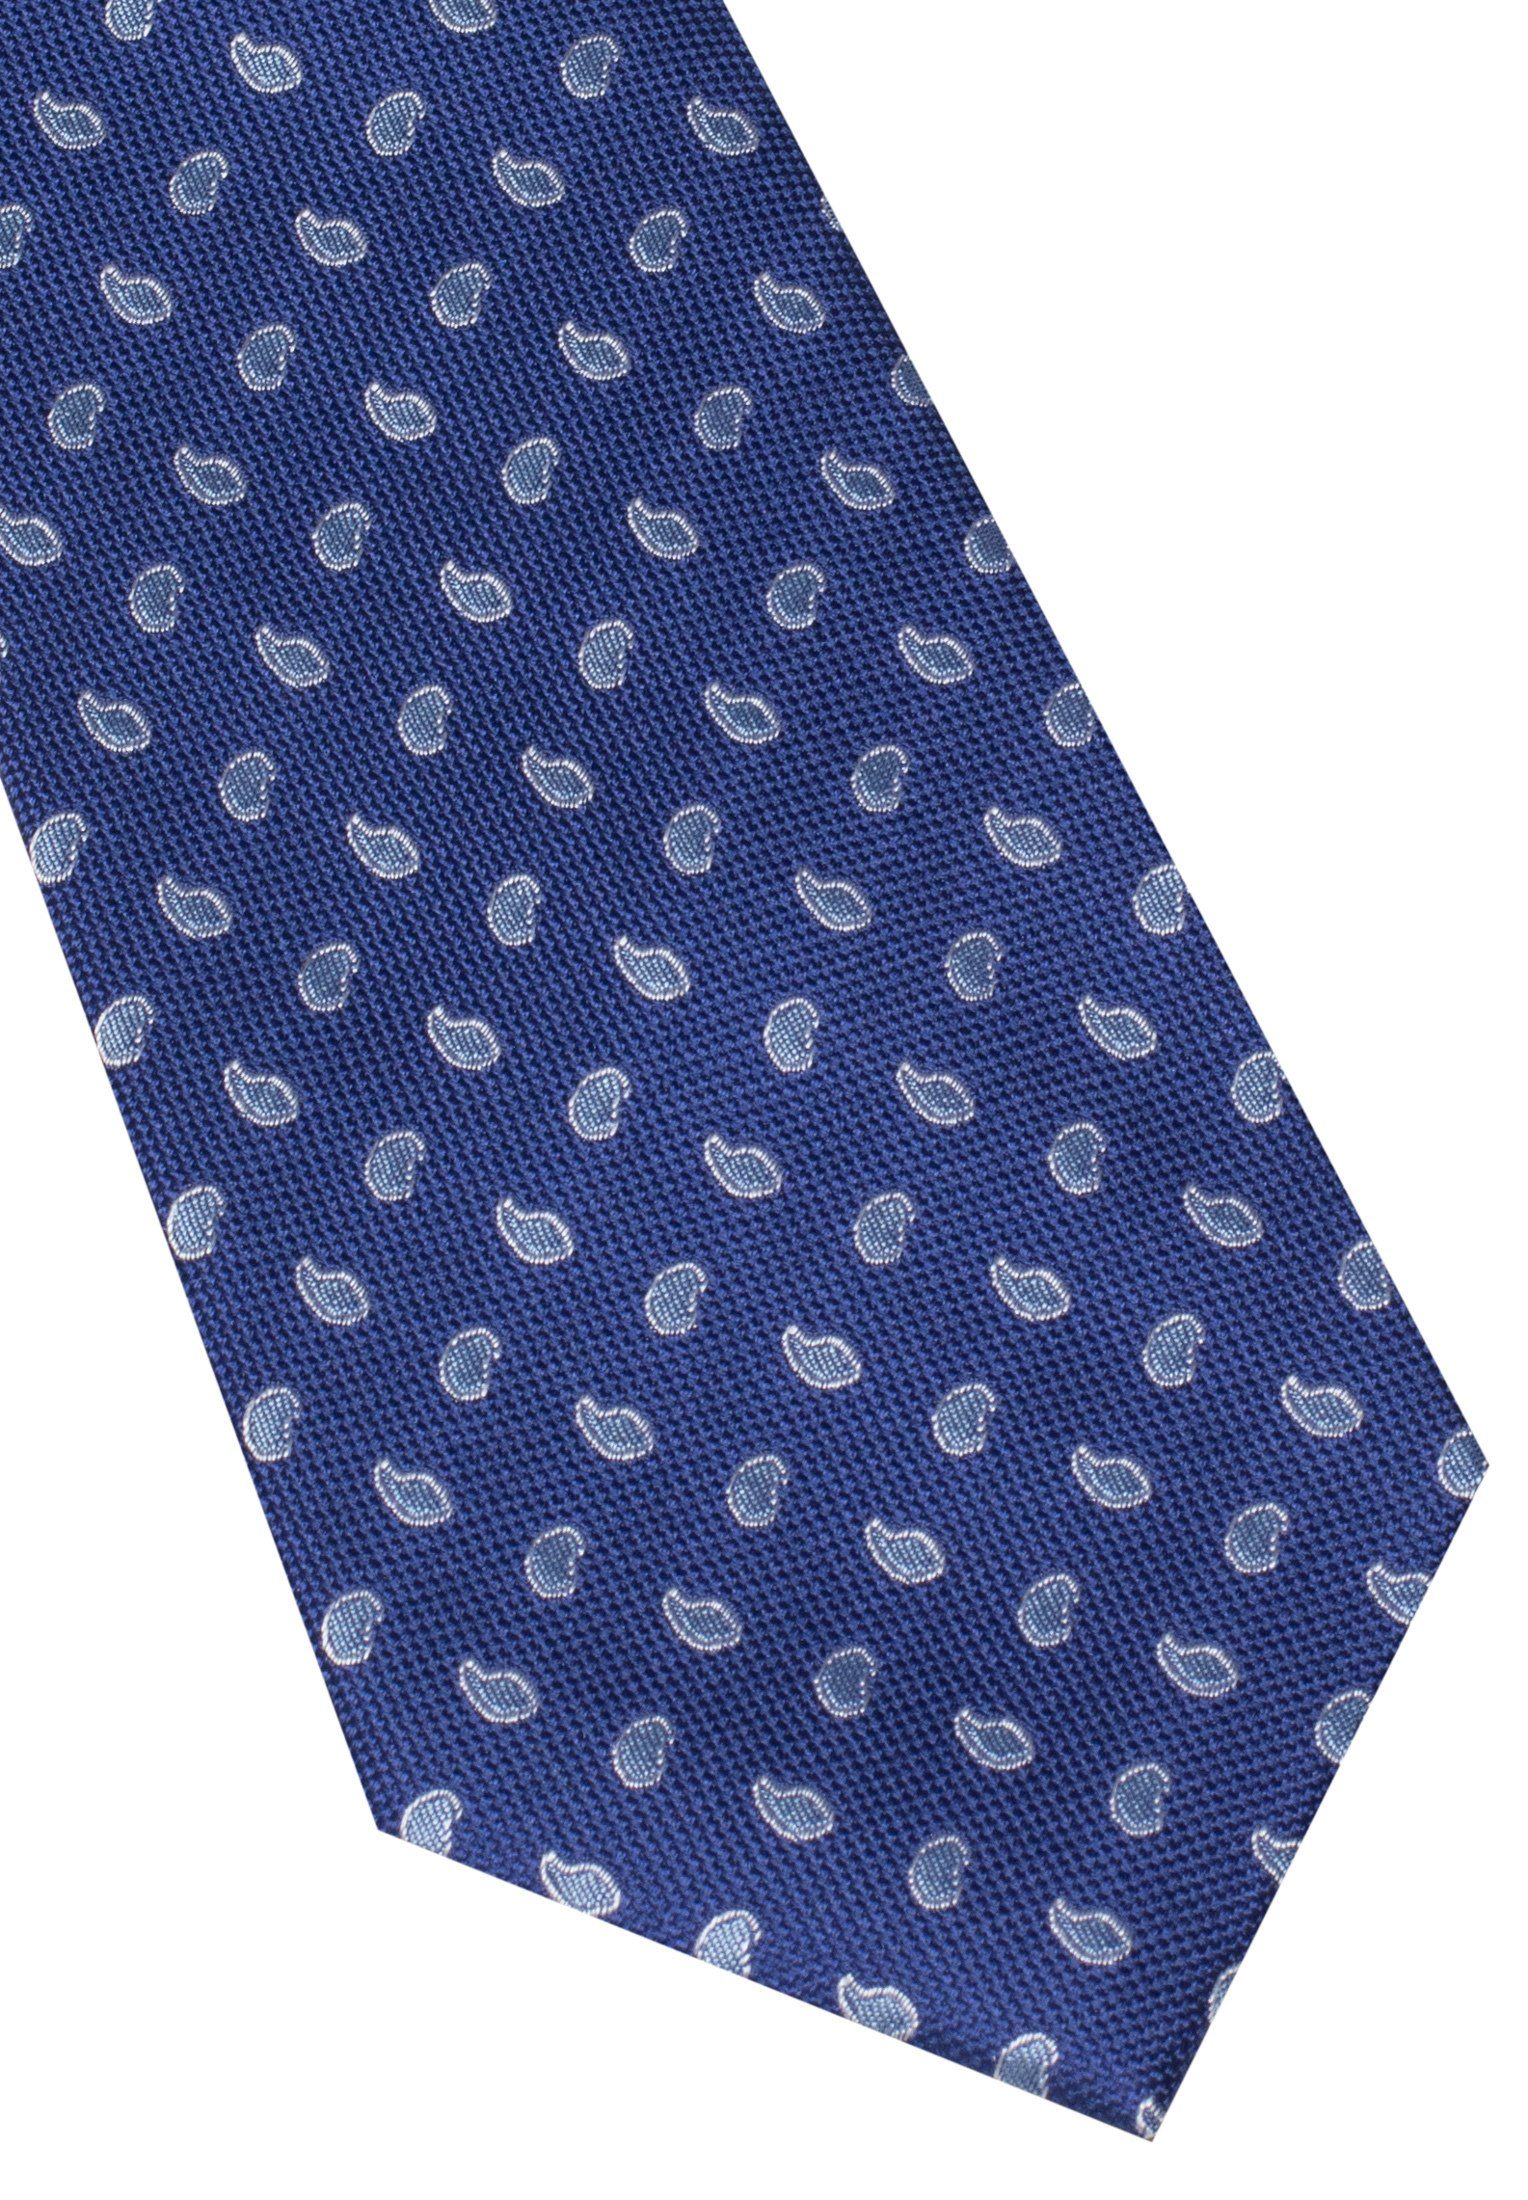 Vollkommenheit Eterna Krawatte navy/blau